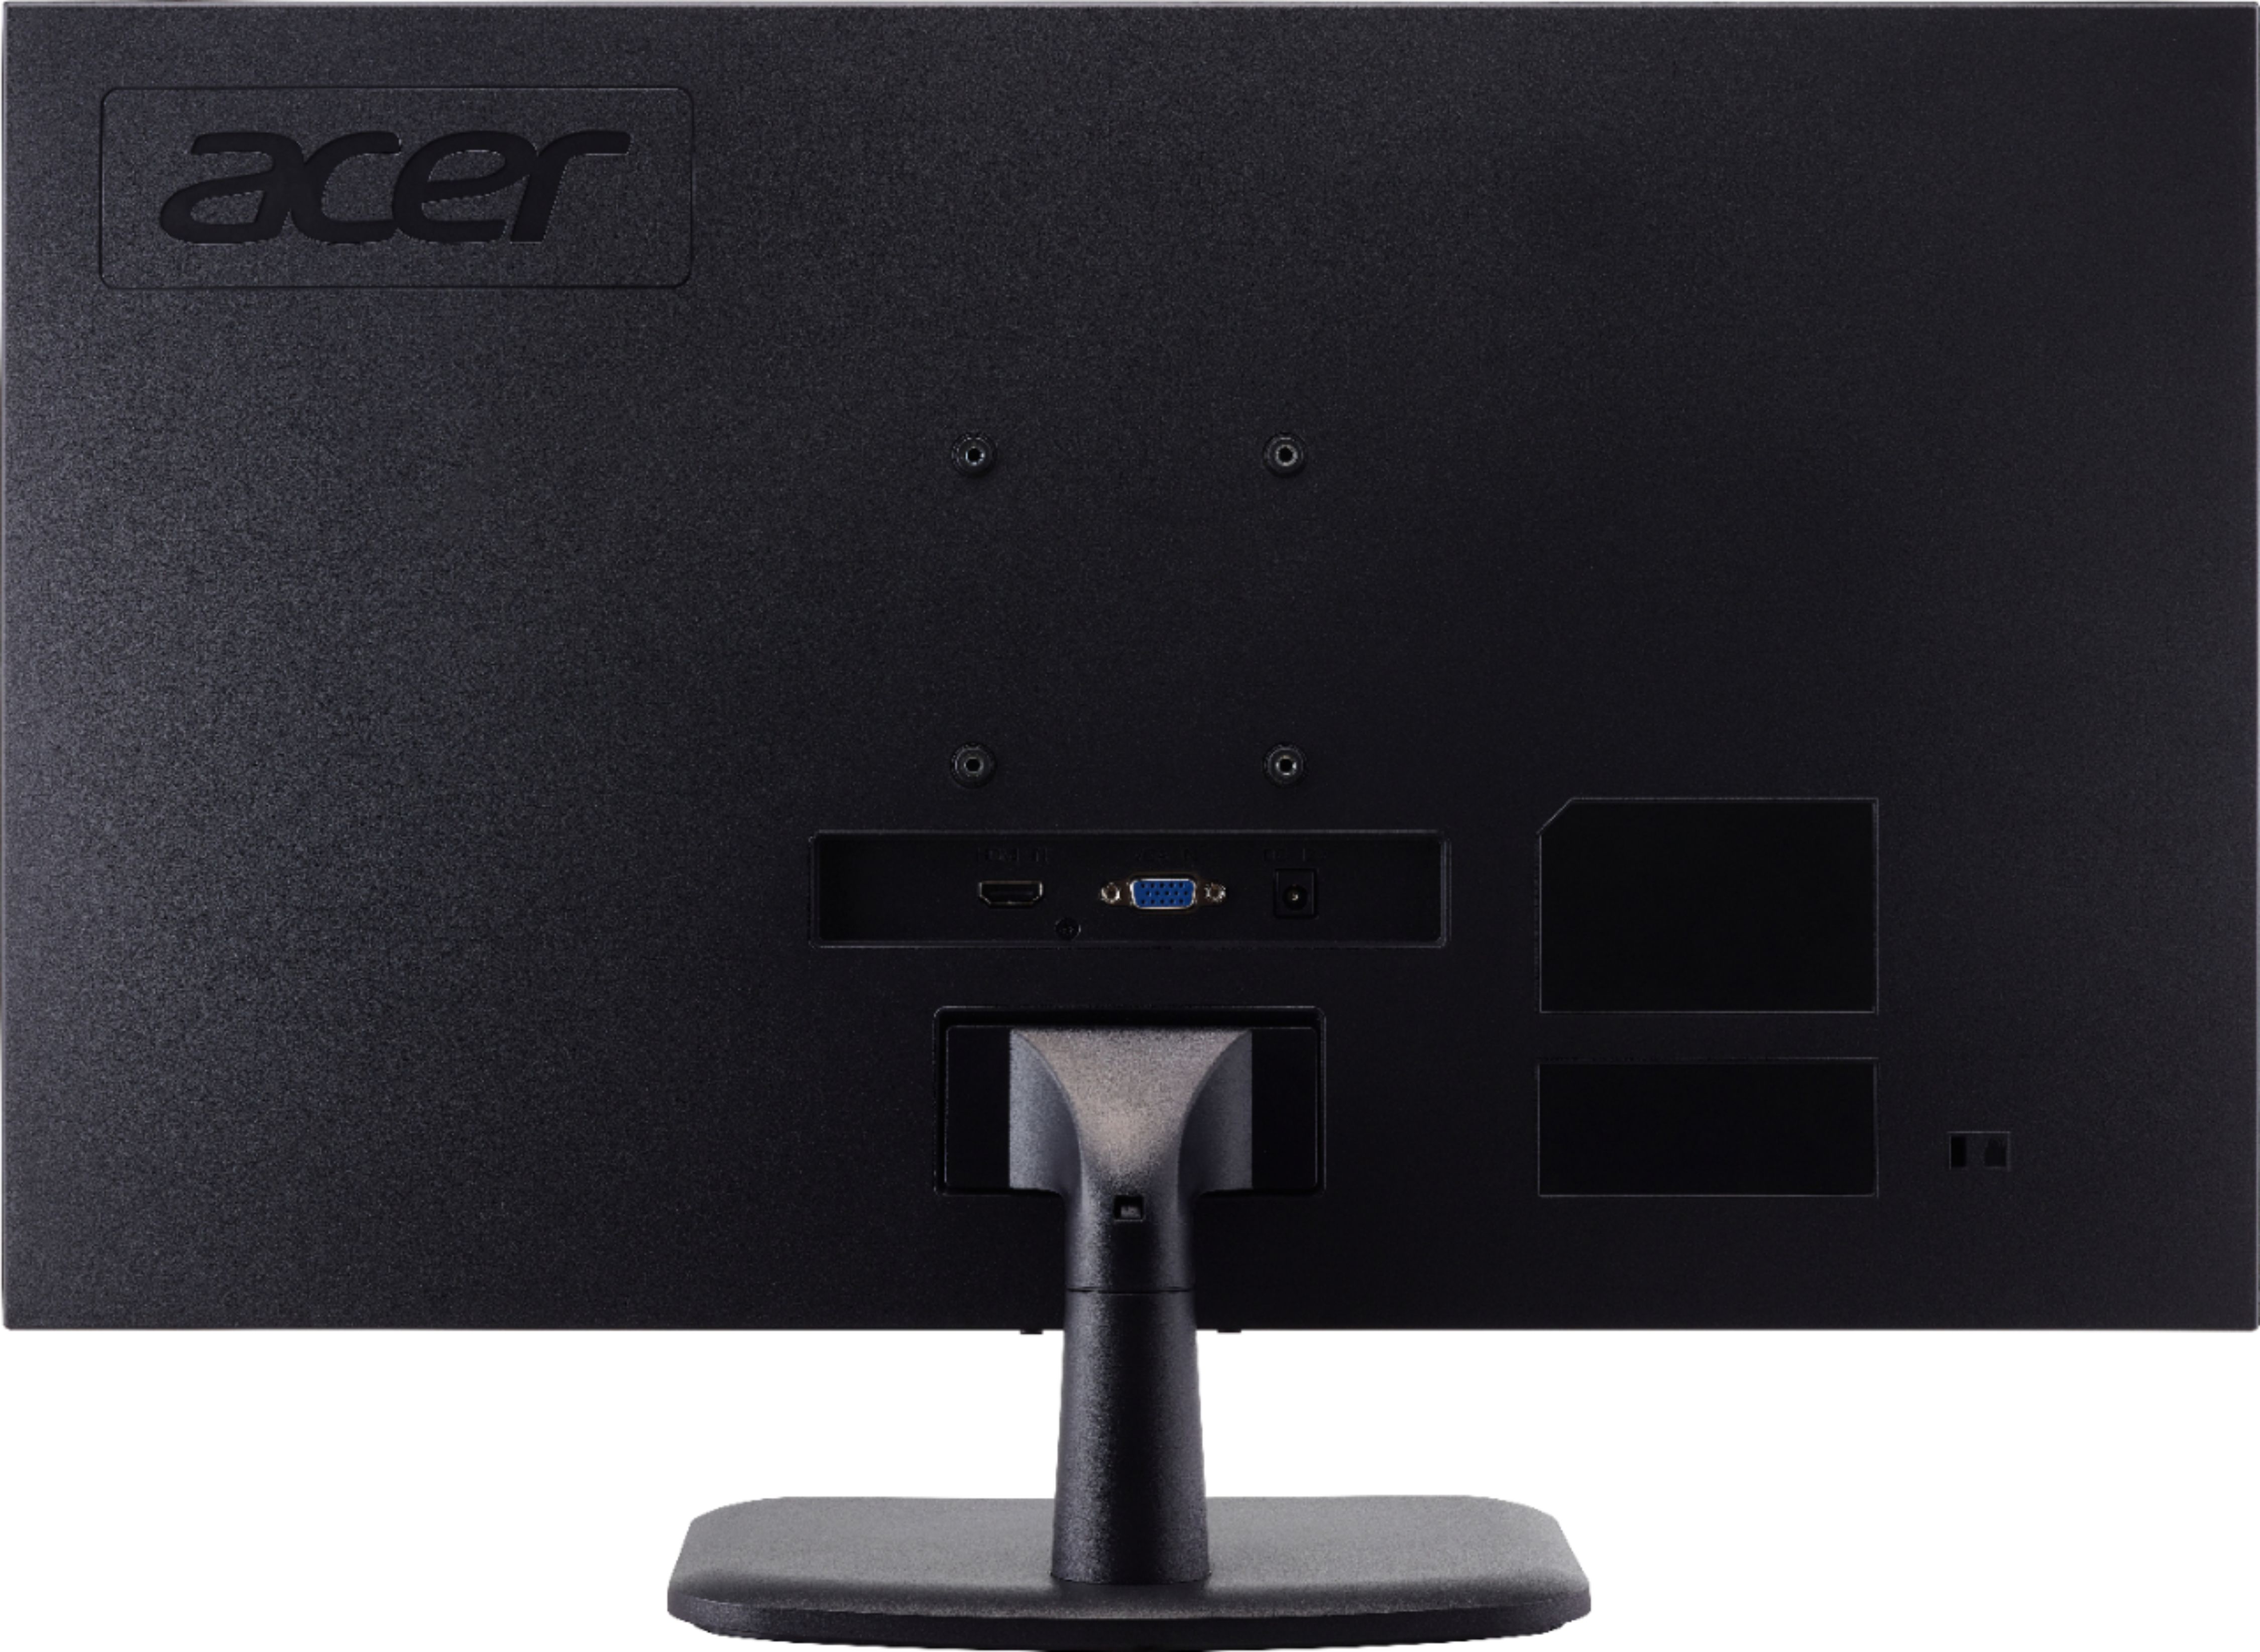 VA Monitor 1920 x 1080 HDMI Cable Included 1 x HDMI & 1 x VGA Port 5ms Response Time 75Hz Refresh Rate Acer EK220Q Abi 21.5 Full HD 